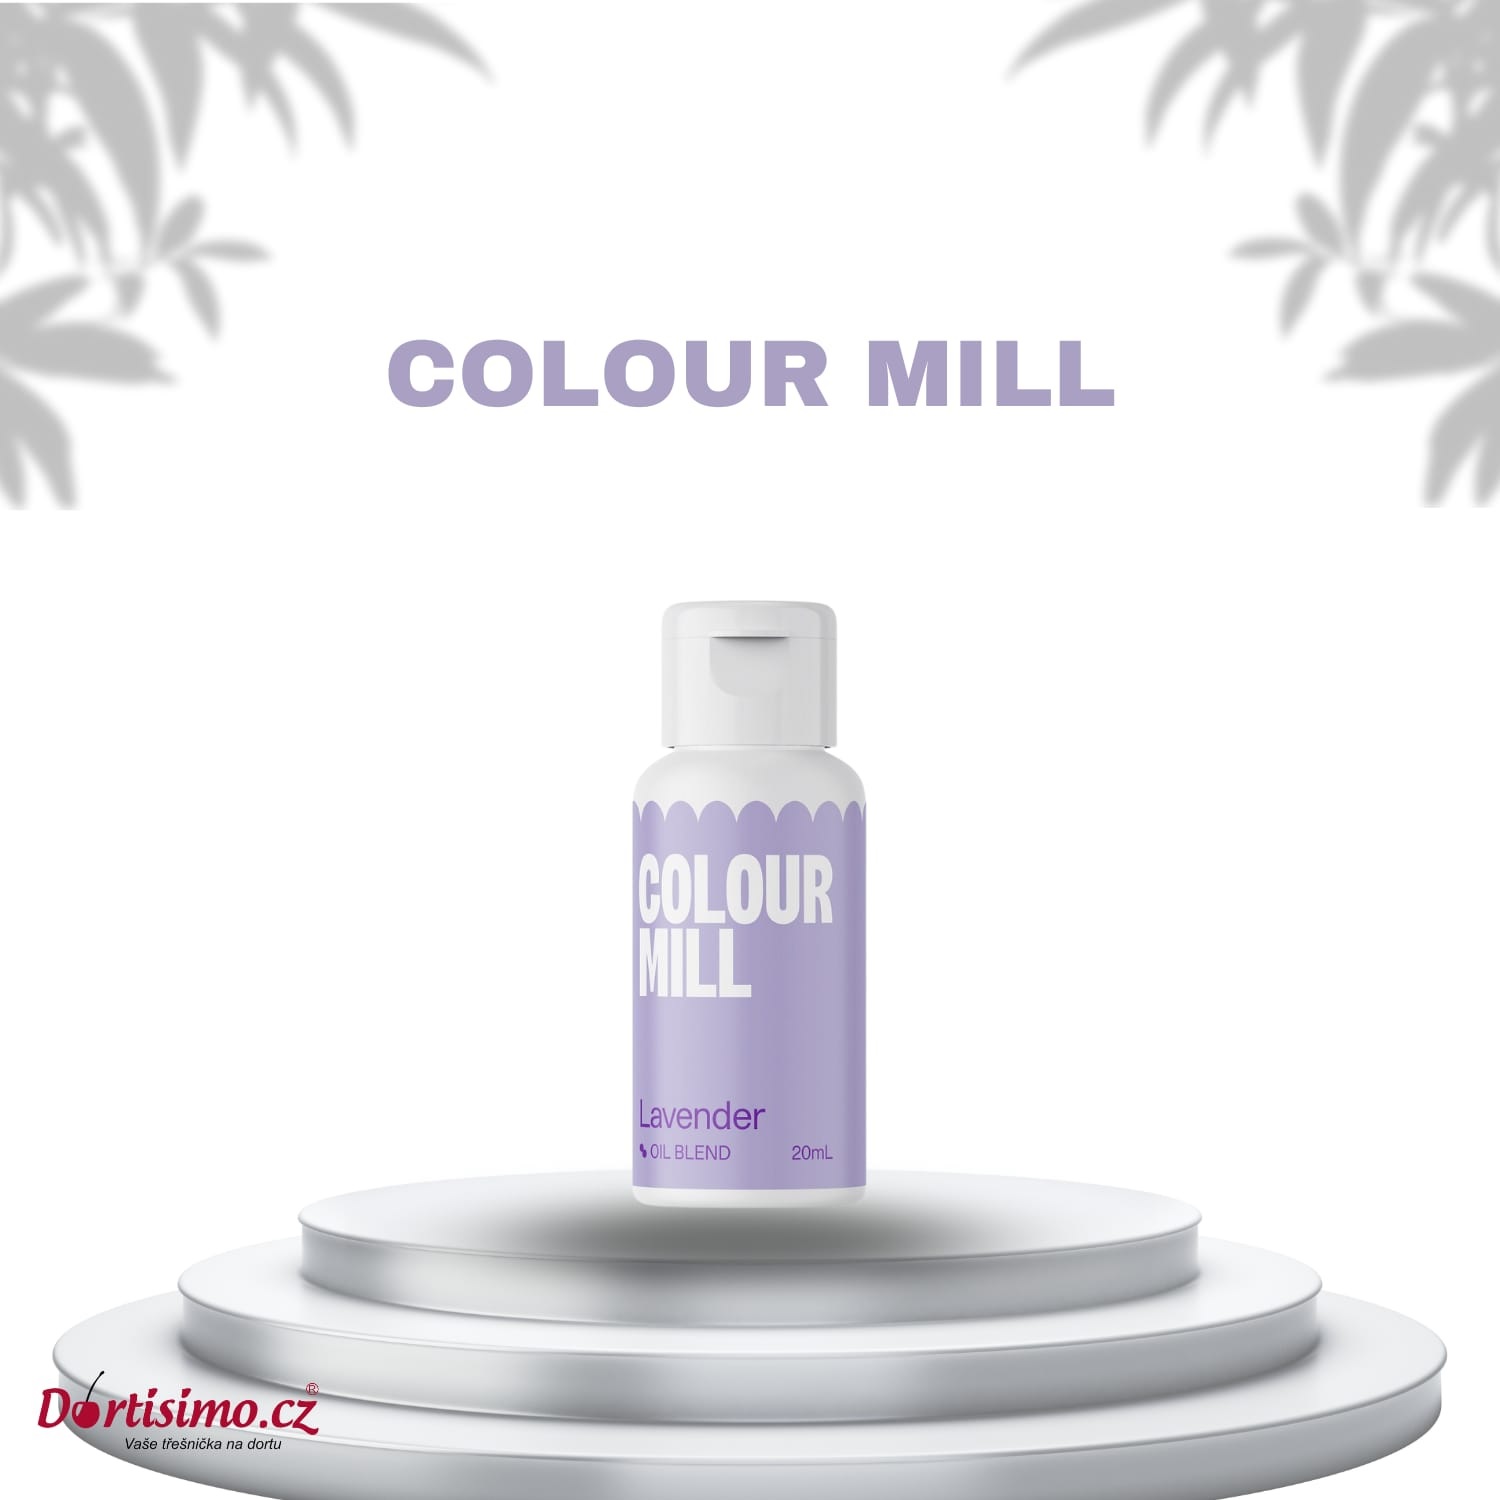 Obrázek k výrobku 23695 - Colour Mill olejová farba Lavender (20ml)